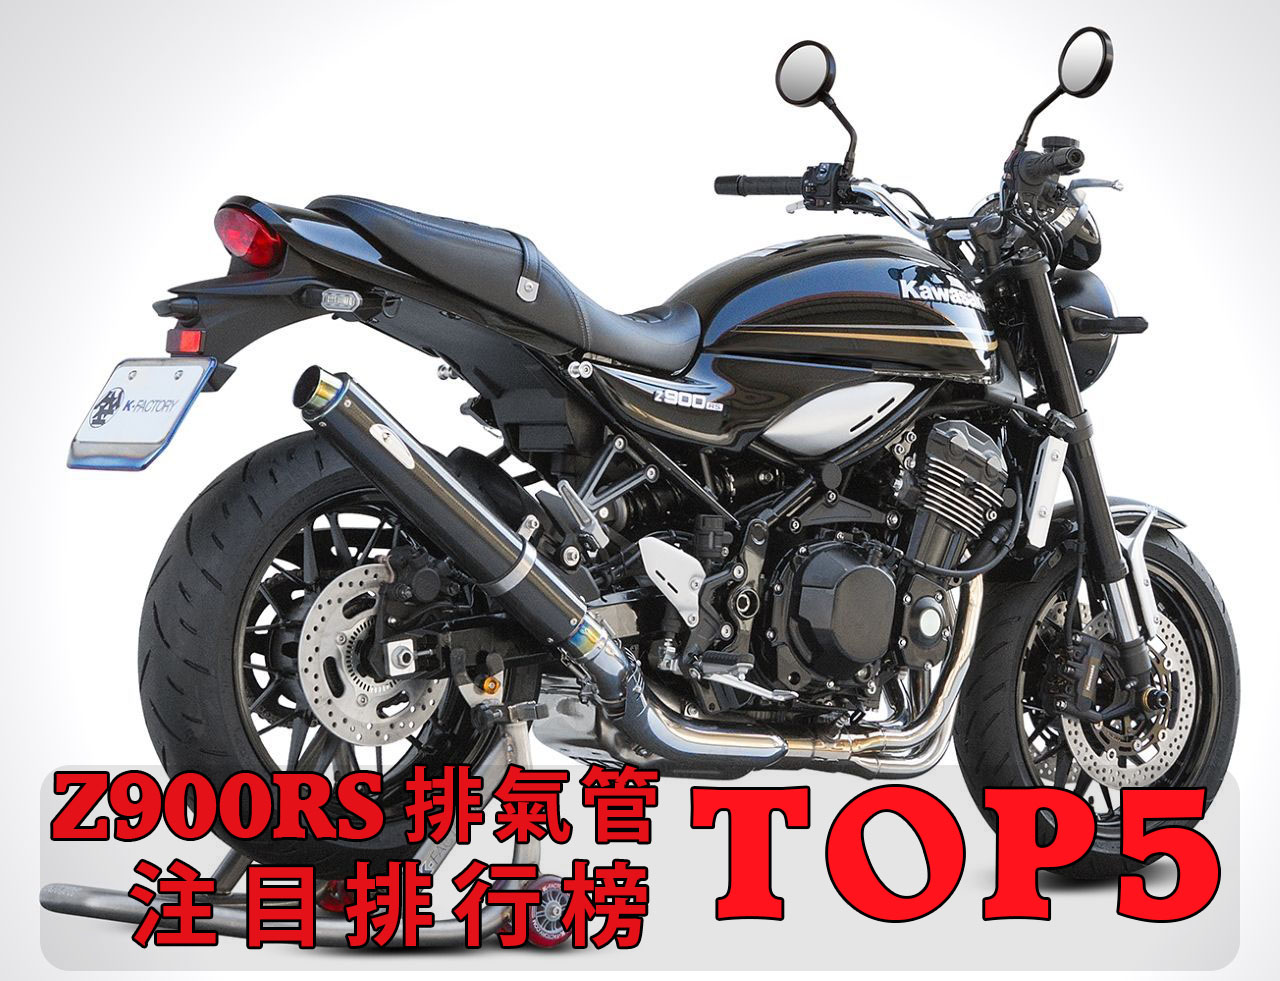 KAWASAKI Z900RS 排气管人气榜 TOP5